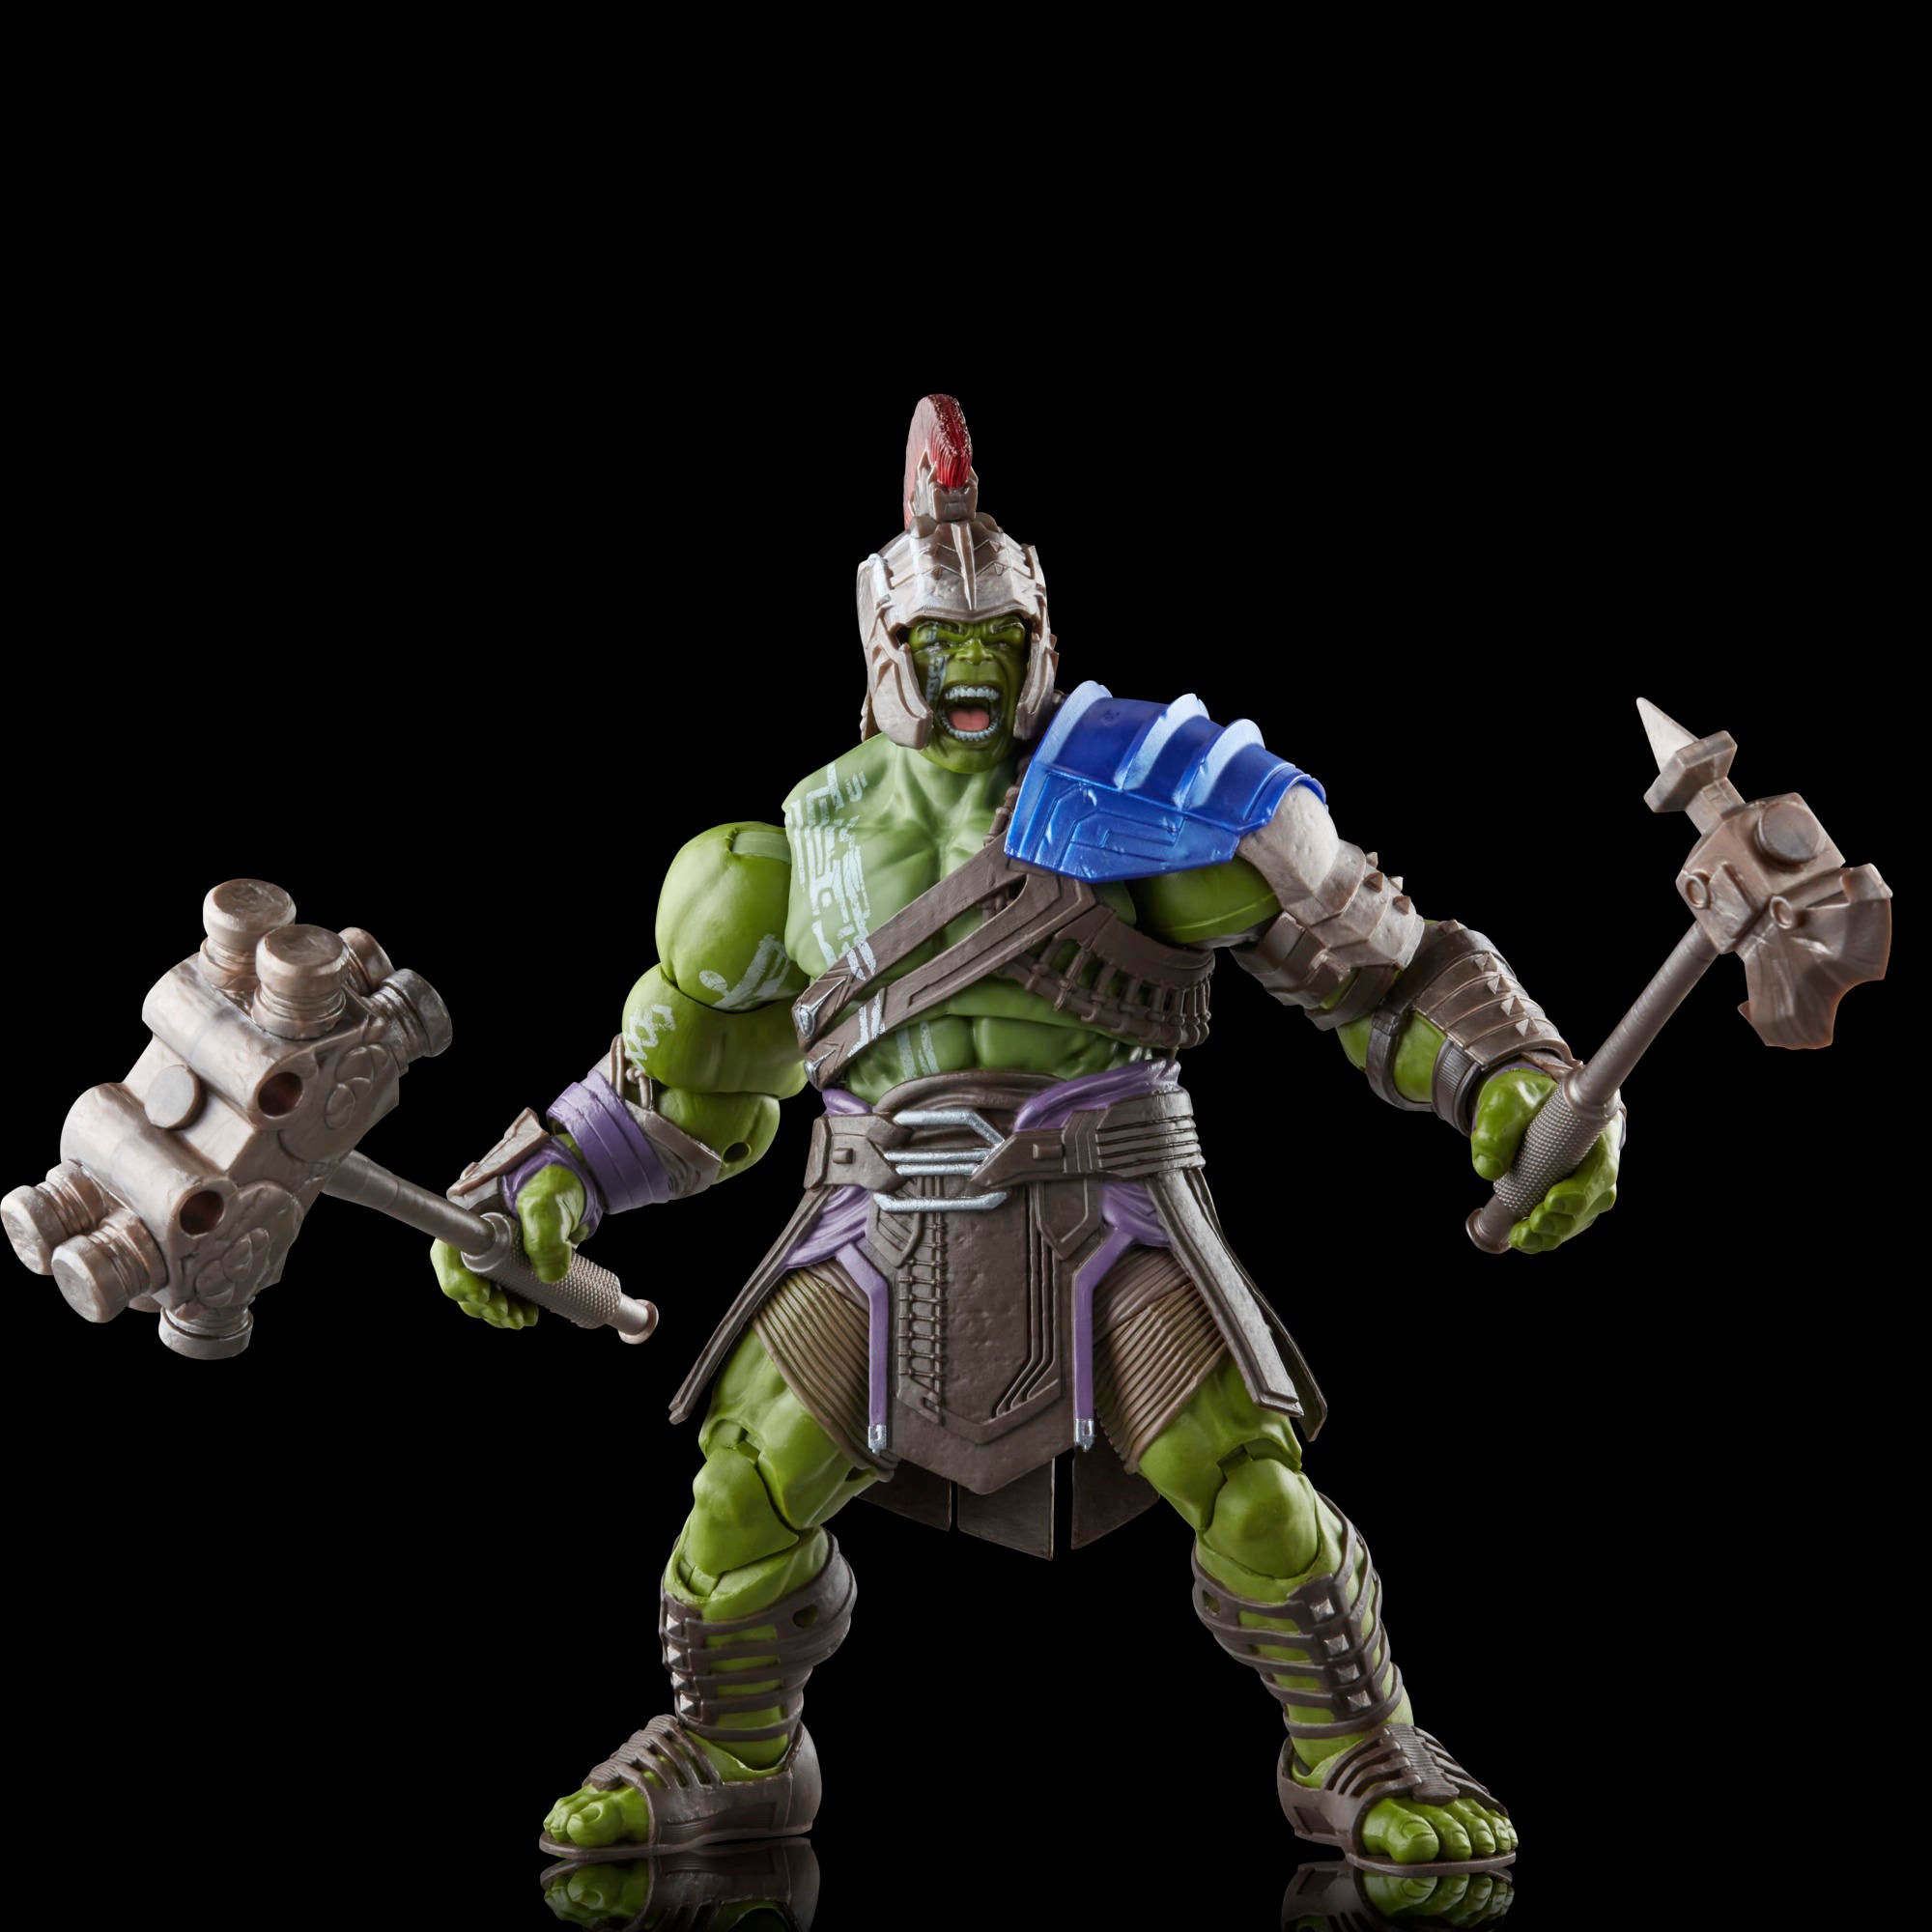 Exclusive Gladiator Hulk Marvel Legends Figure Is On Sale Now